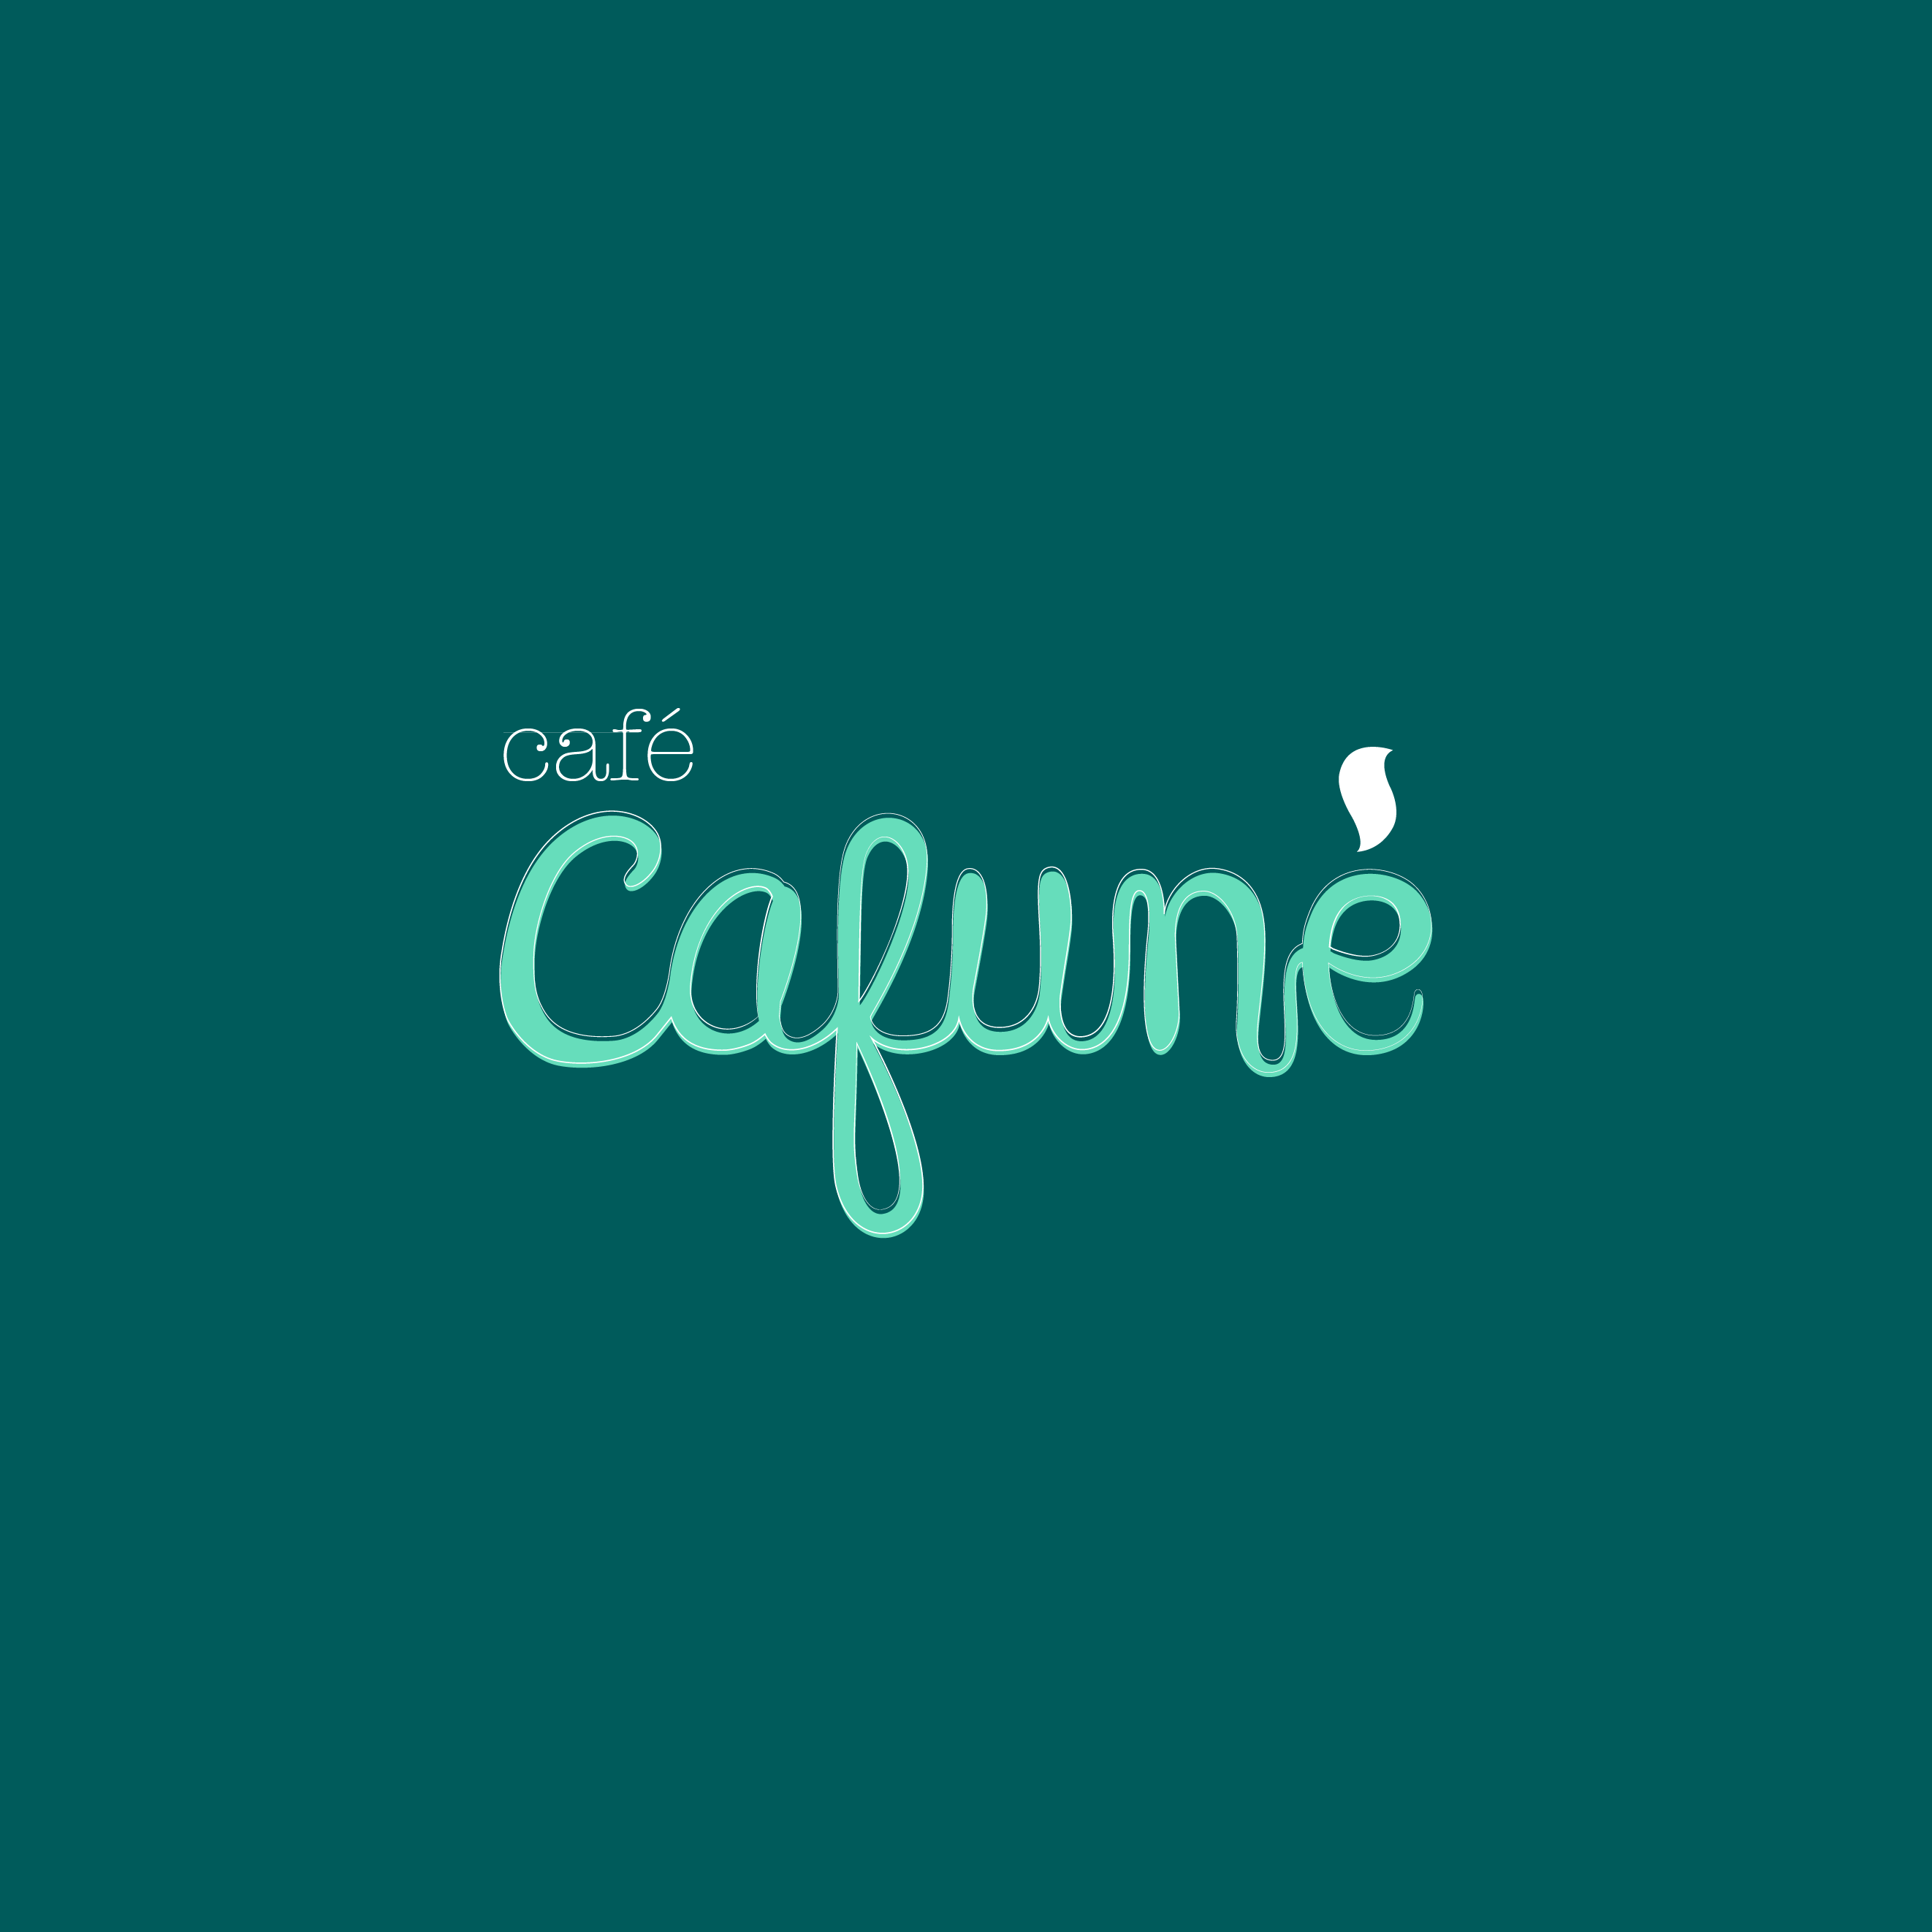 Cafune logo